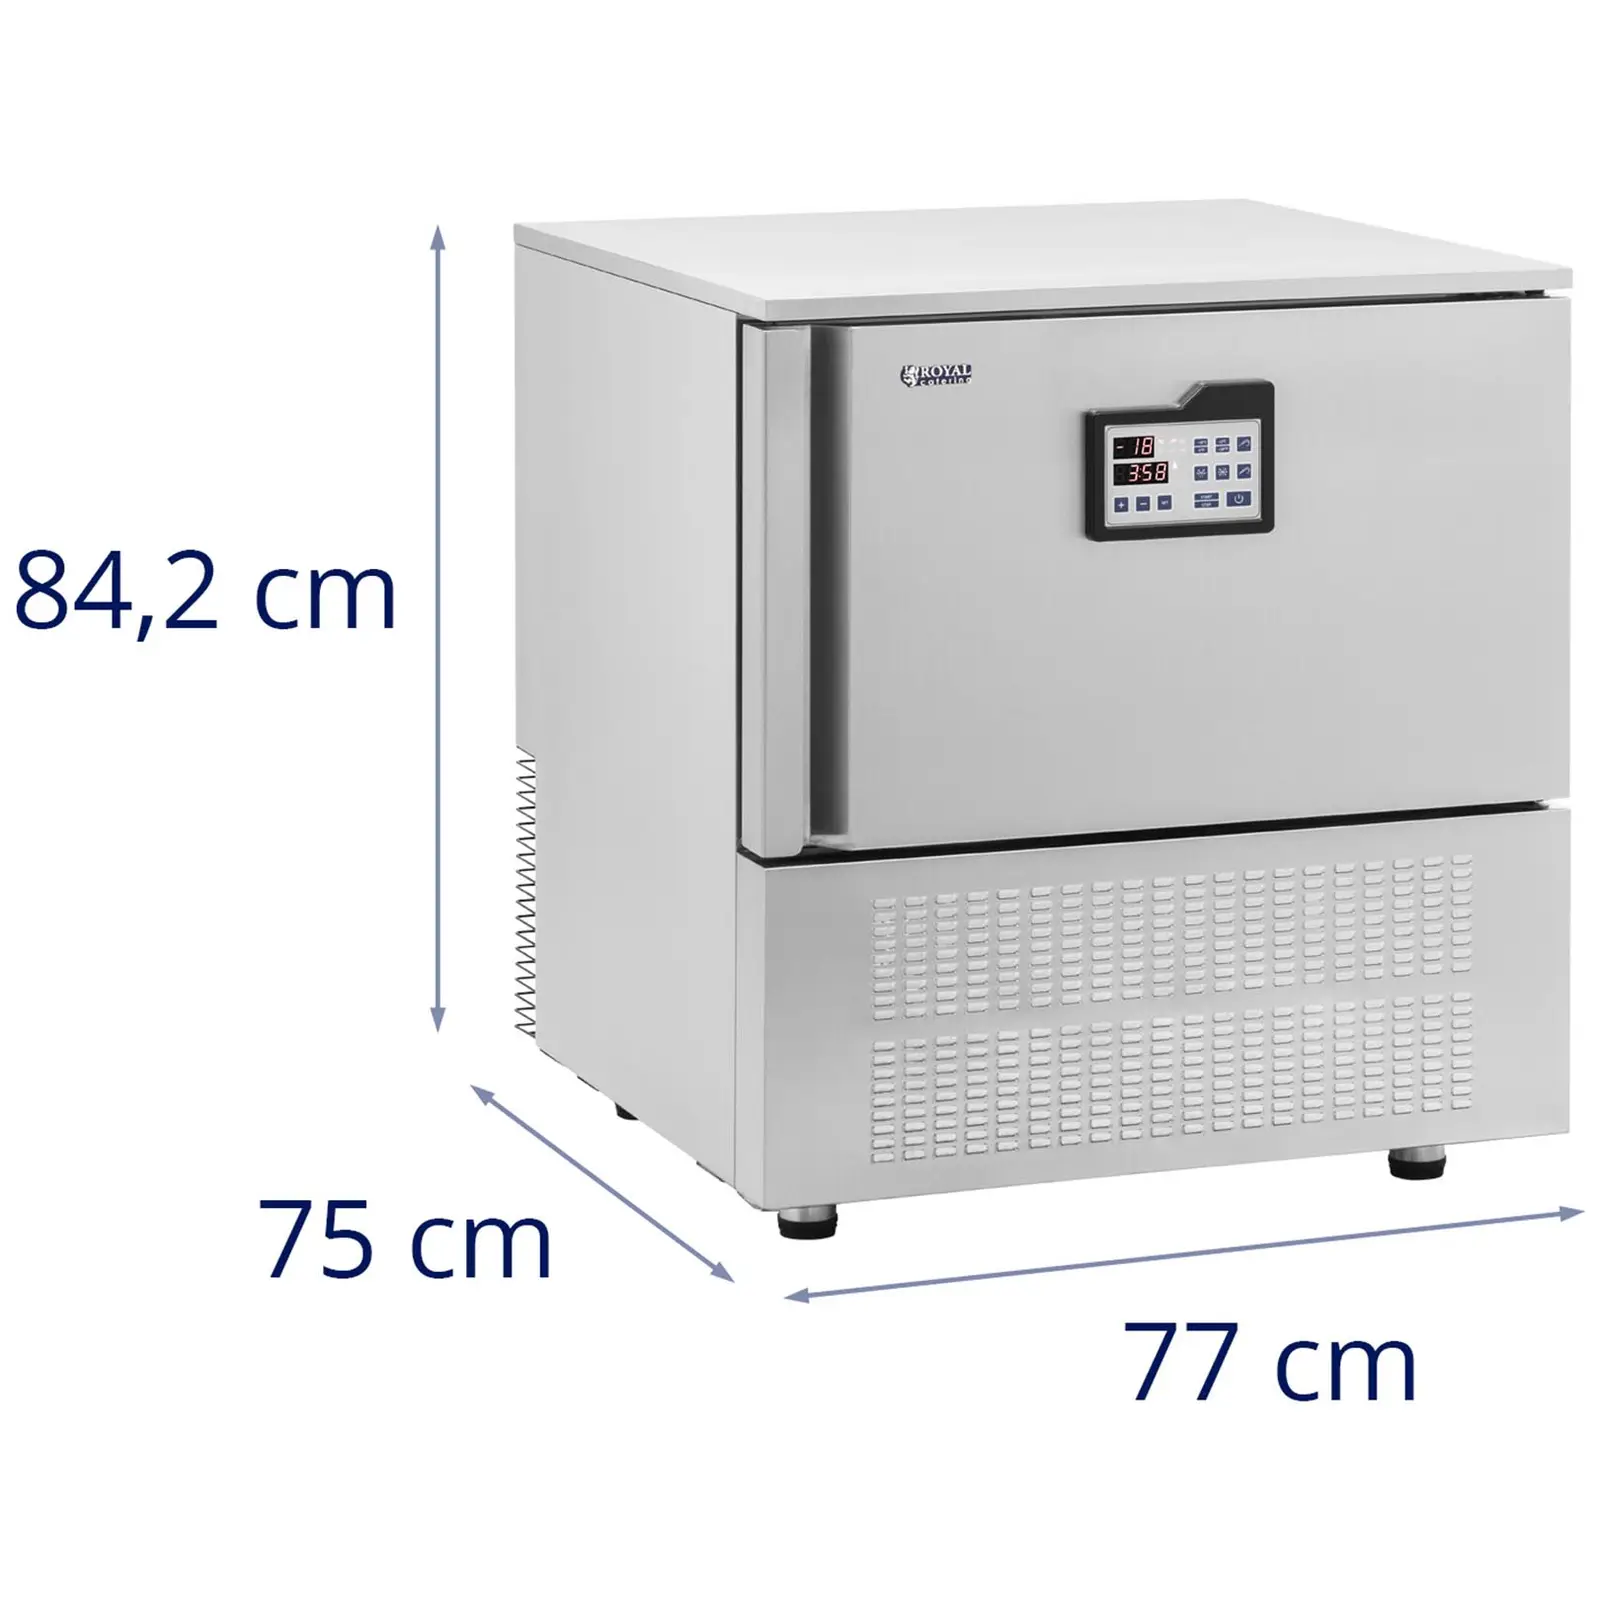 Abatedor de temperatura - 96 L - Royal Catering - capacidade de congelamento: 12 kg / 238 min